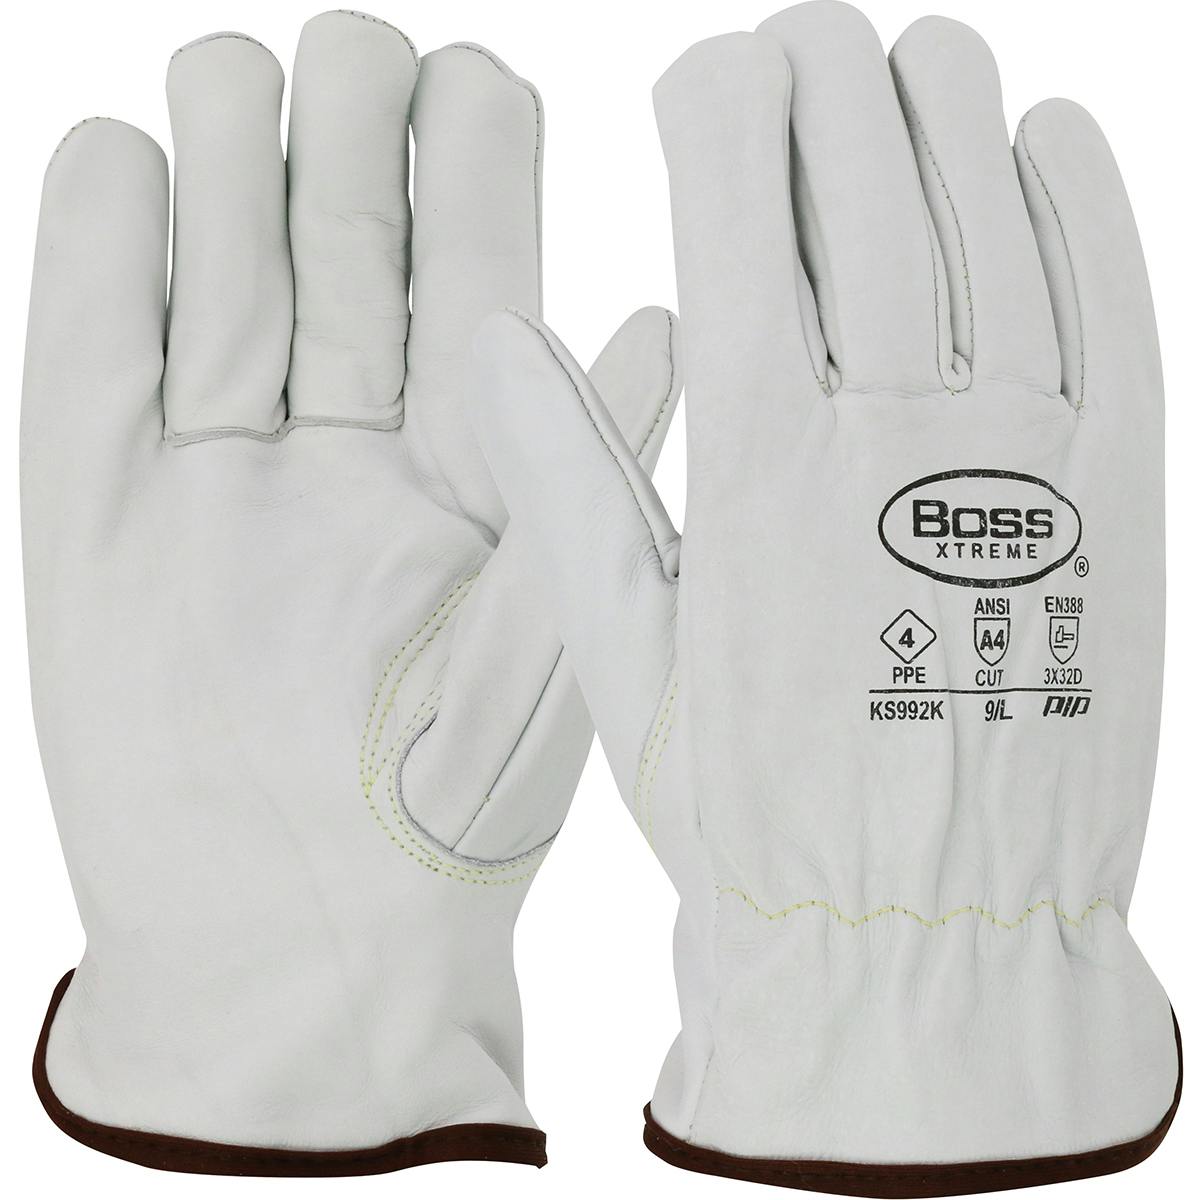 Boss® Xtreme AR Top Grain Cowhide Leather Drivers Glove with Para-Aramid Lining - Keystone Thumb (KS992K)